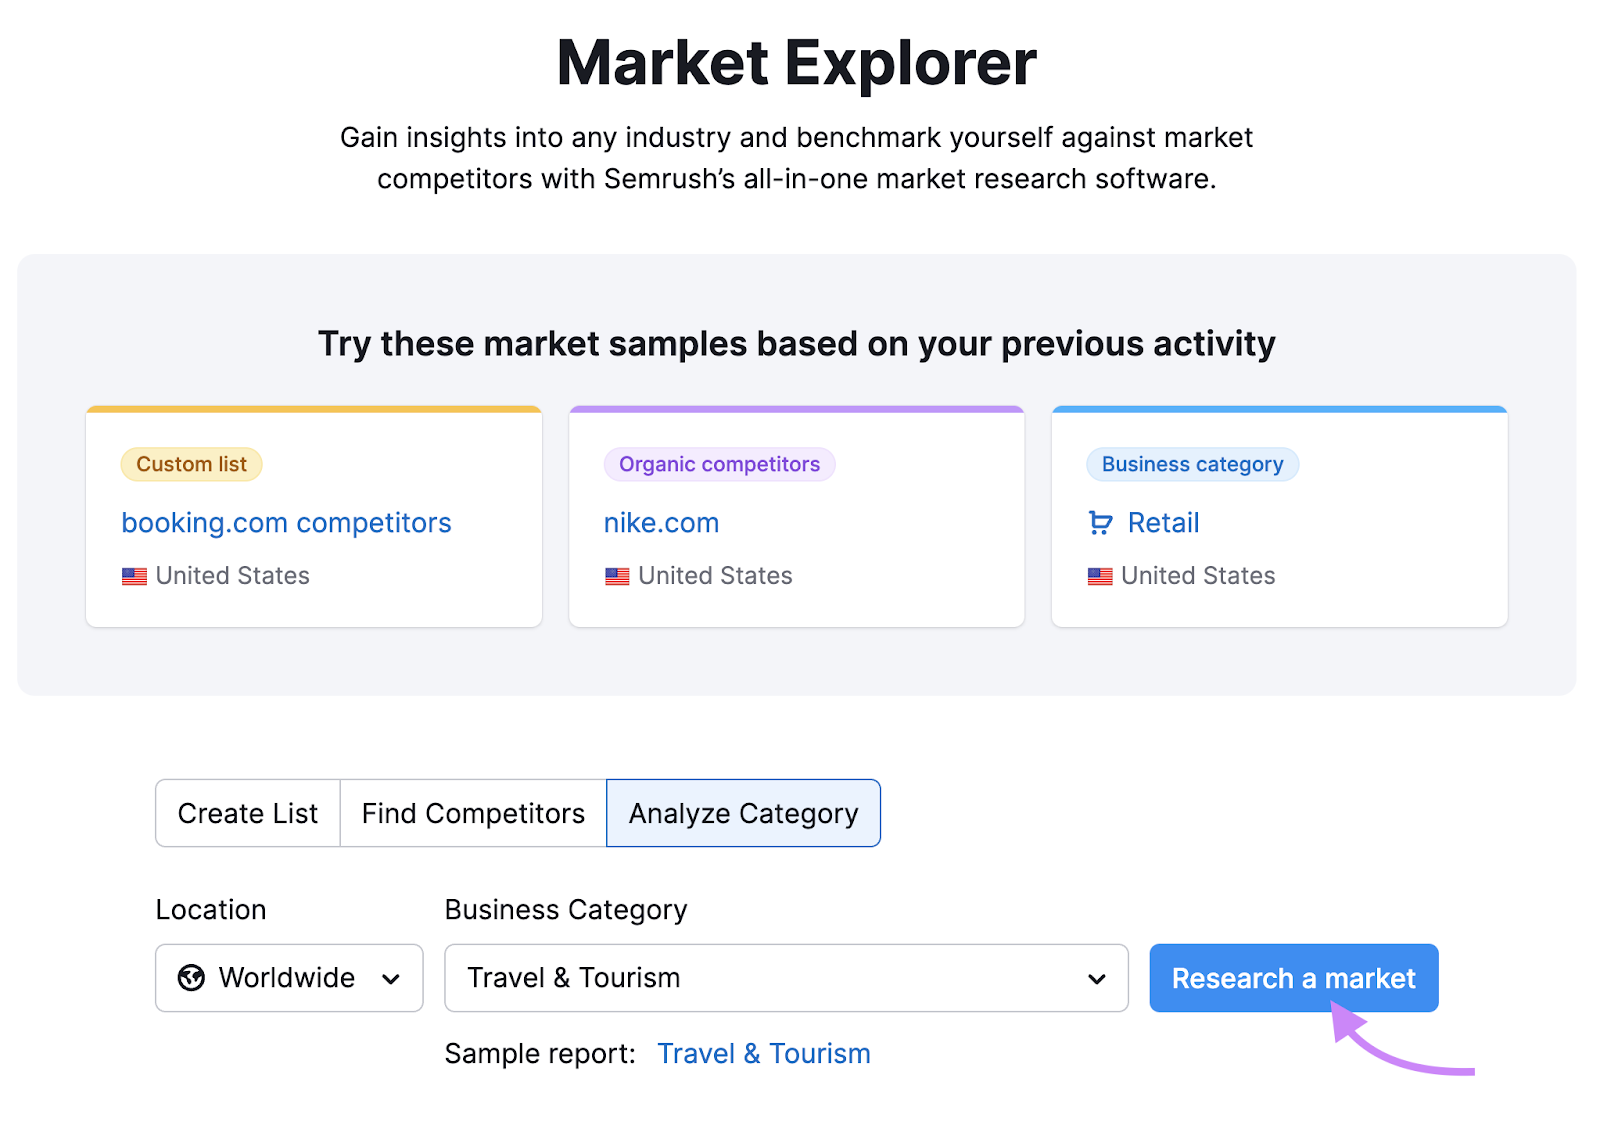 Semrush’s Market Explorer tool